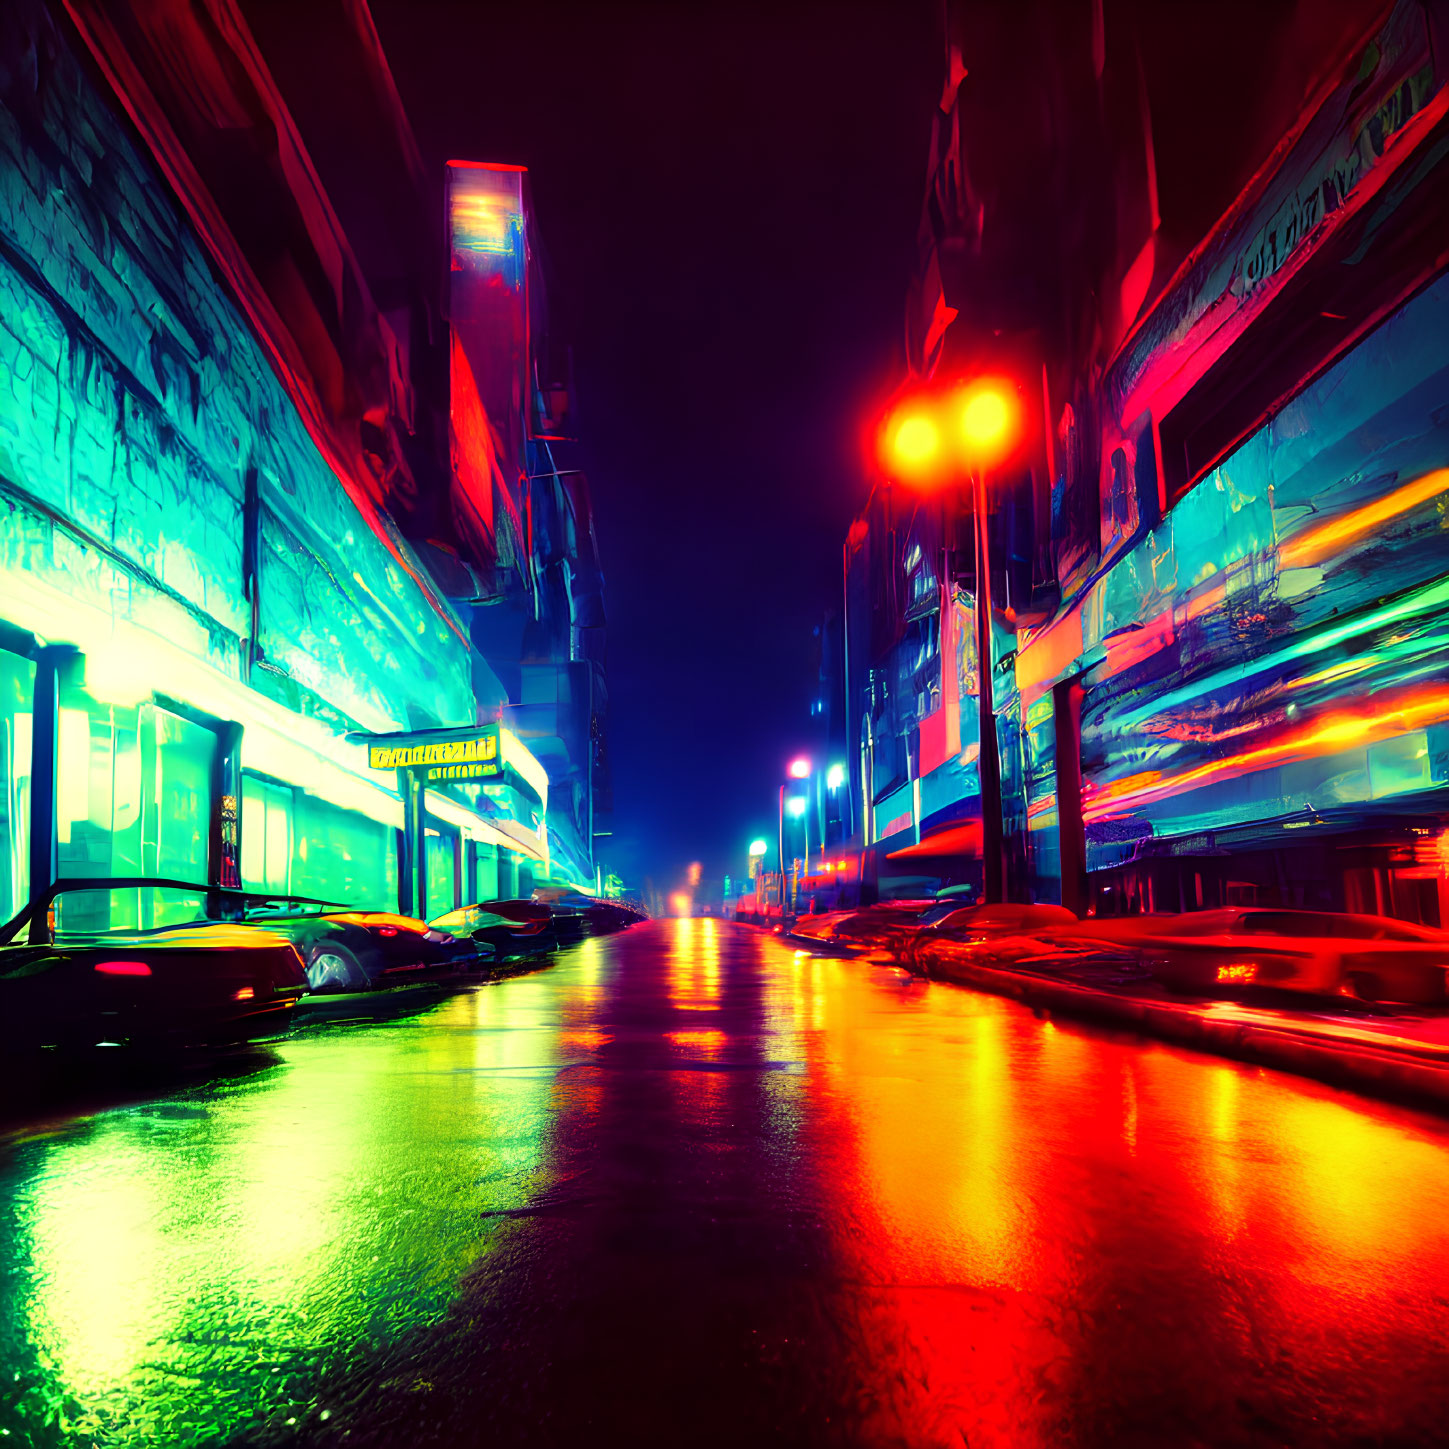 Neon-lit futuristic city street at night with blurred light trails.